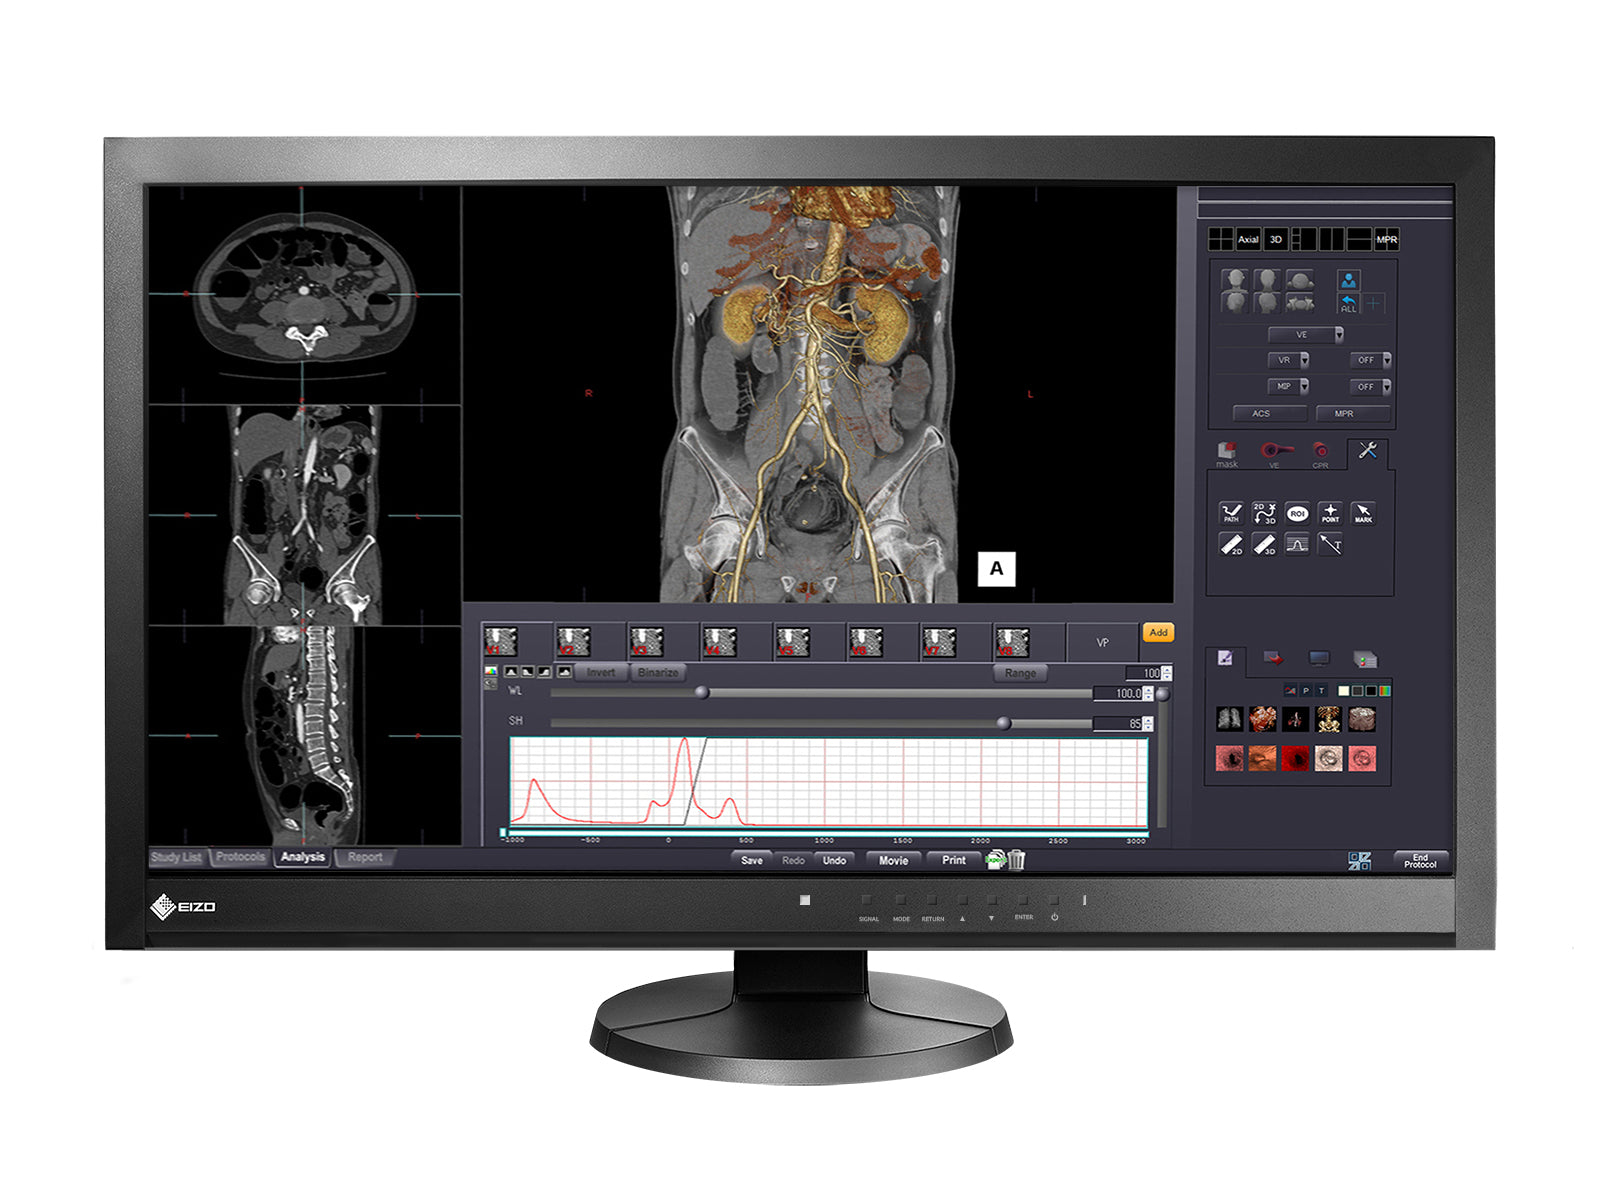 Eizo RadiForce MX270W 3.7MP 27" Color LED Clinical Review Display (MX270W) Monitors.com 